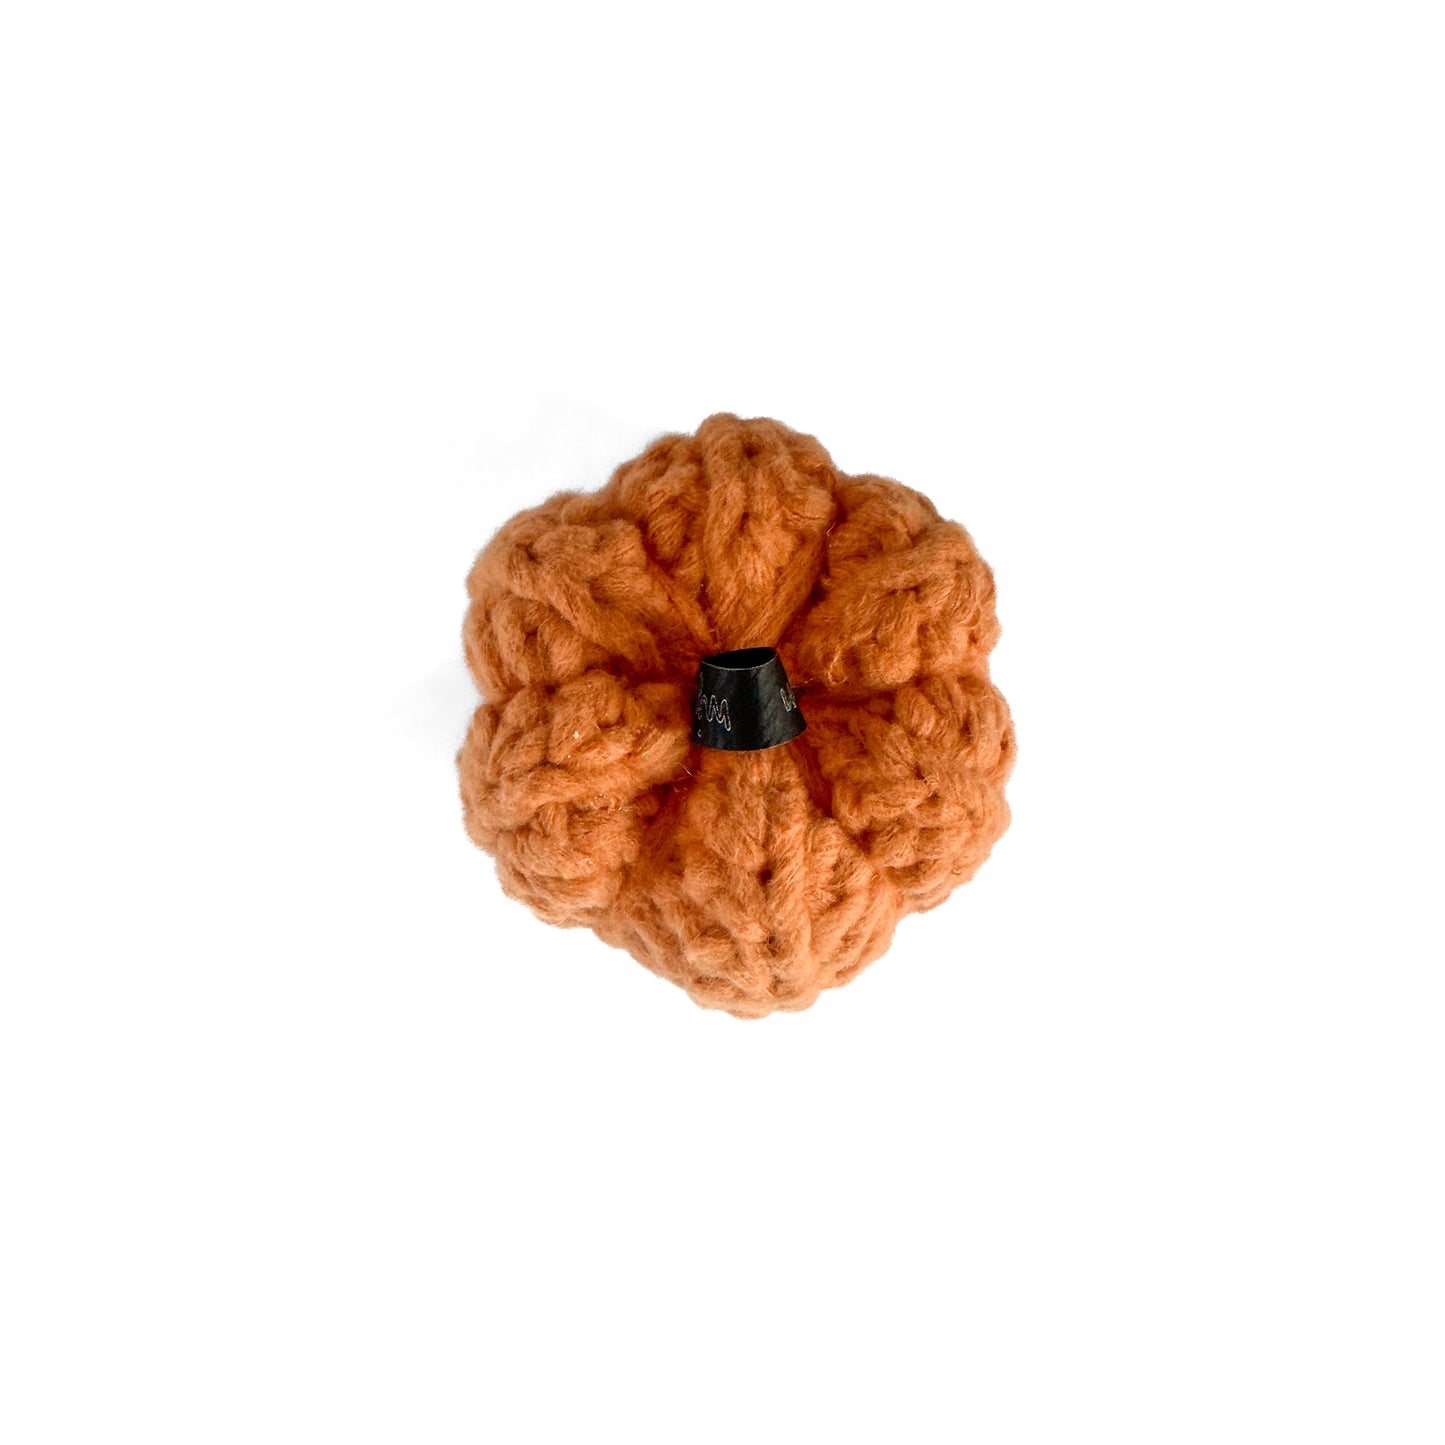 Mini Crochet Pumpkin Decoration - Orange